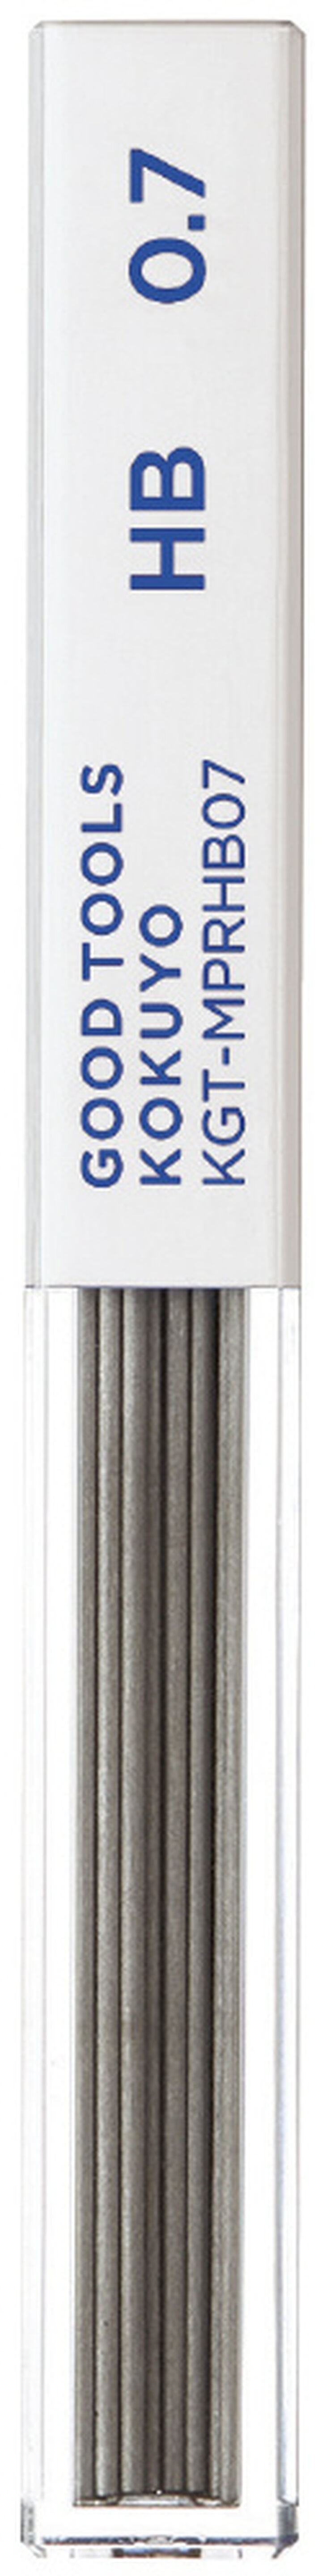 GOOD TOOLS Mechanical Pencil lead 0.7mm HB,White, medium